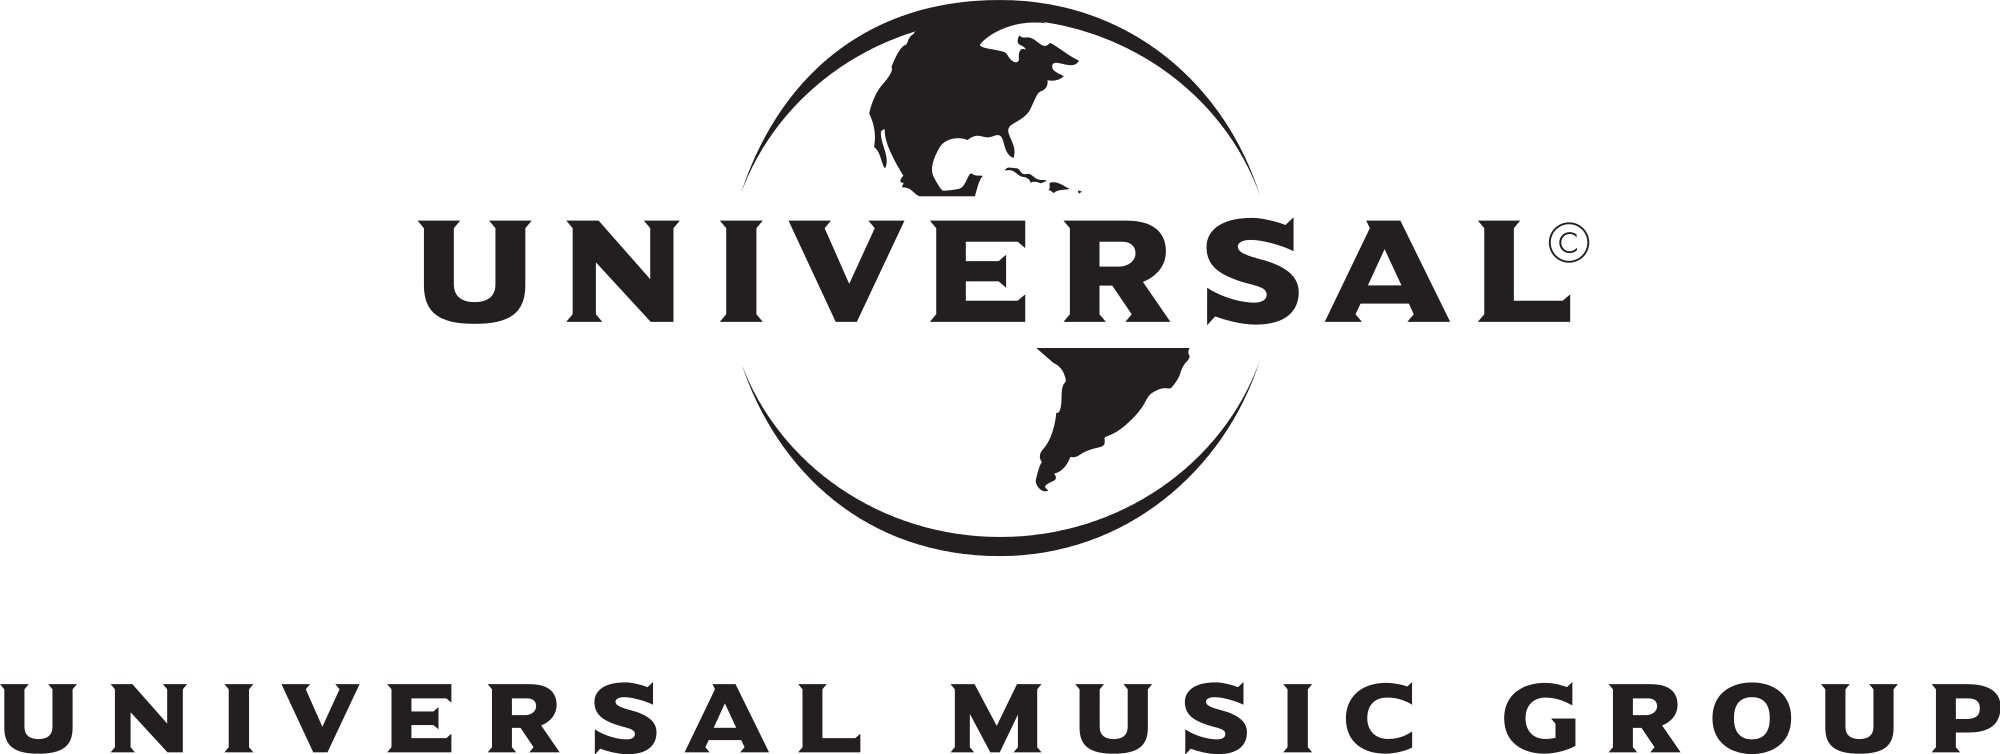 BOX SET - BLACKPINK - THE ALBUM - INTERNATIONAL EXCLUSIVE / VERSION 1 –  Universal Music Colombia Store